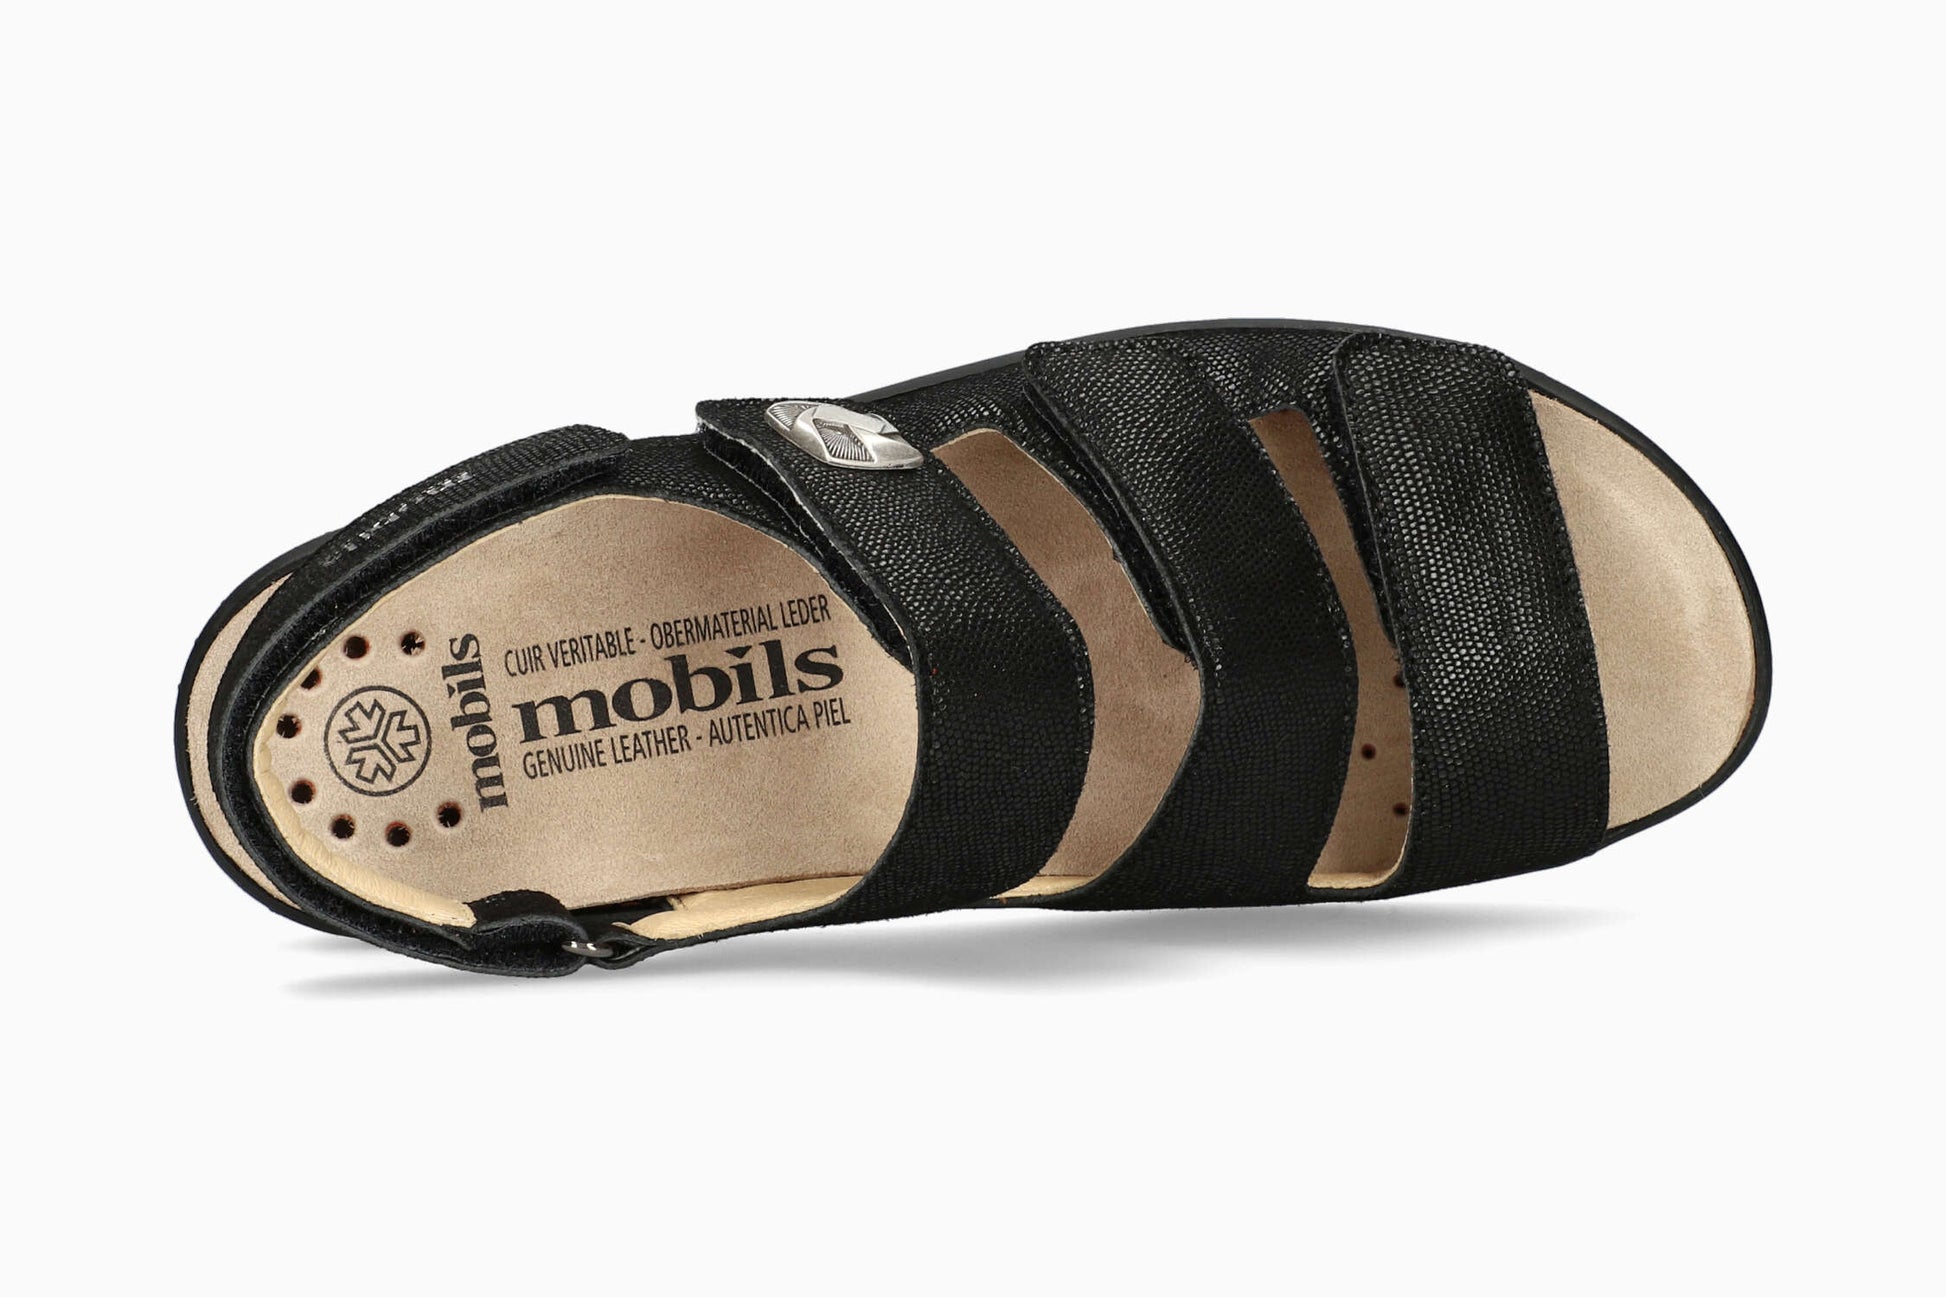 Mobils Giorgina Black Women's Sandal Top